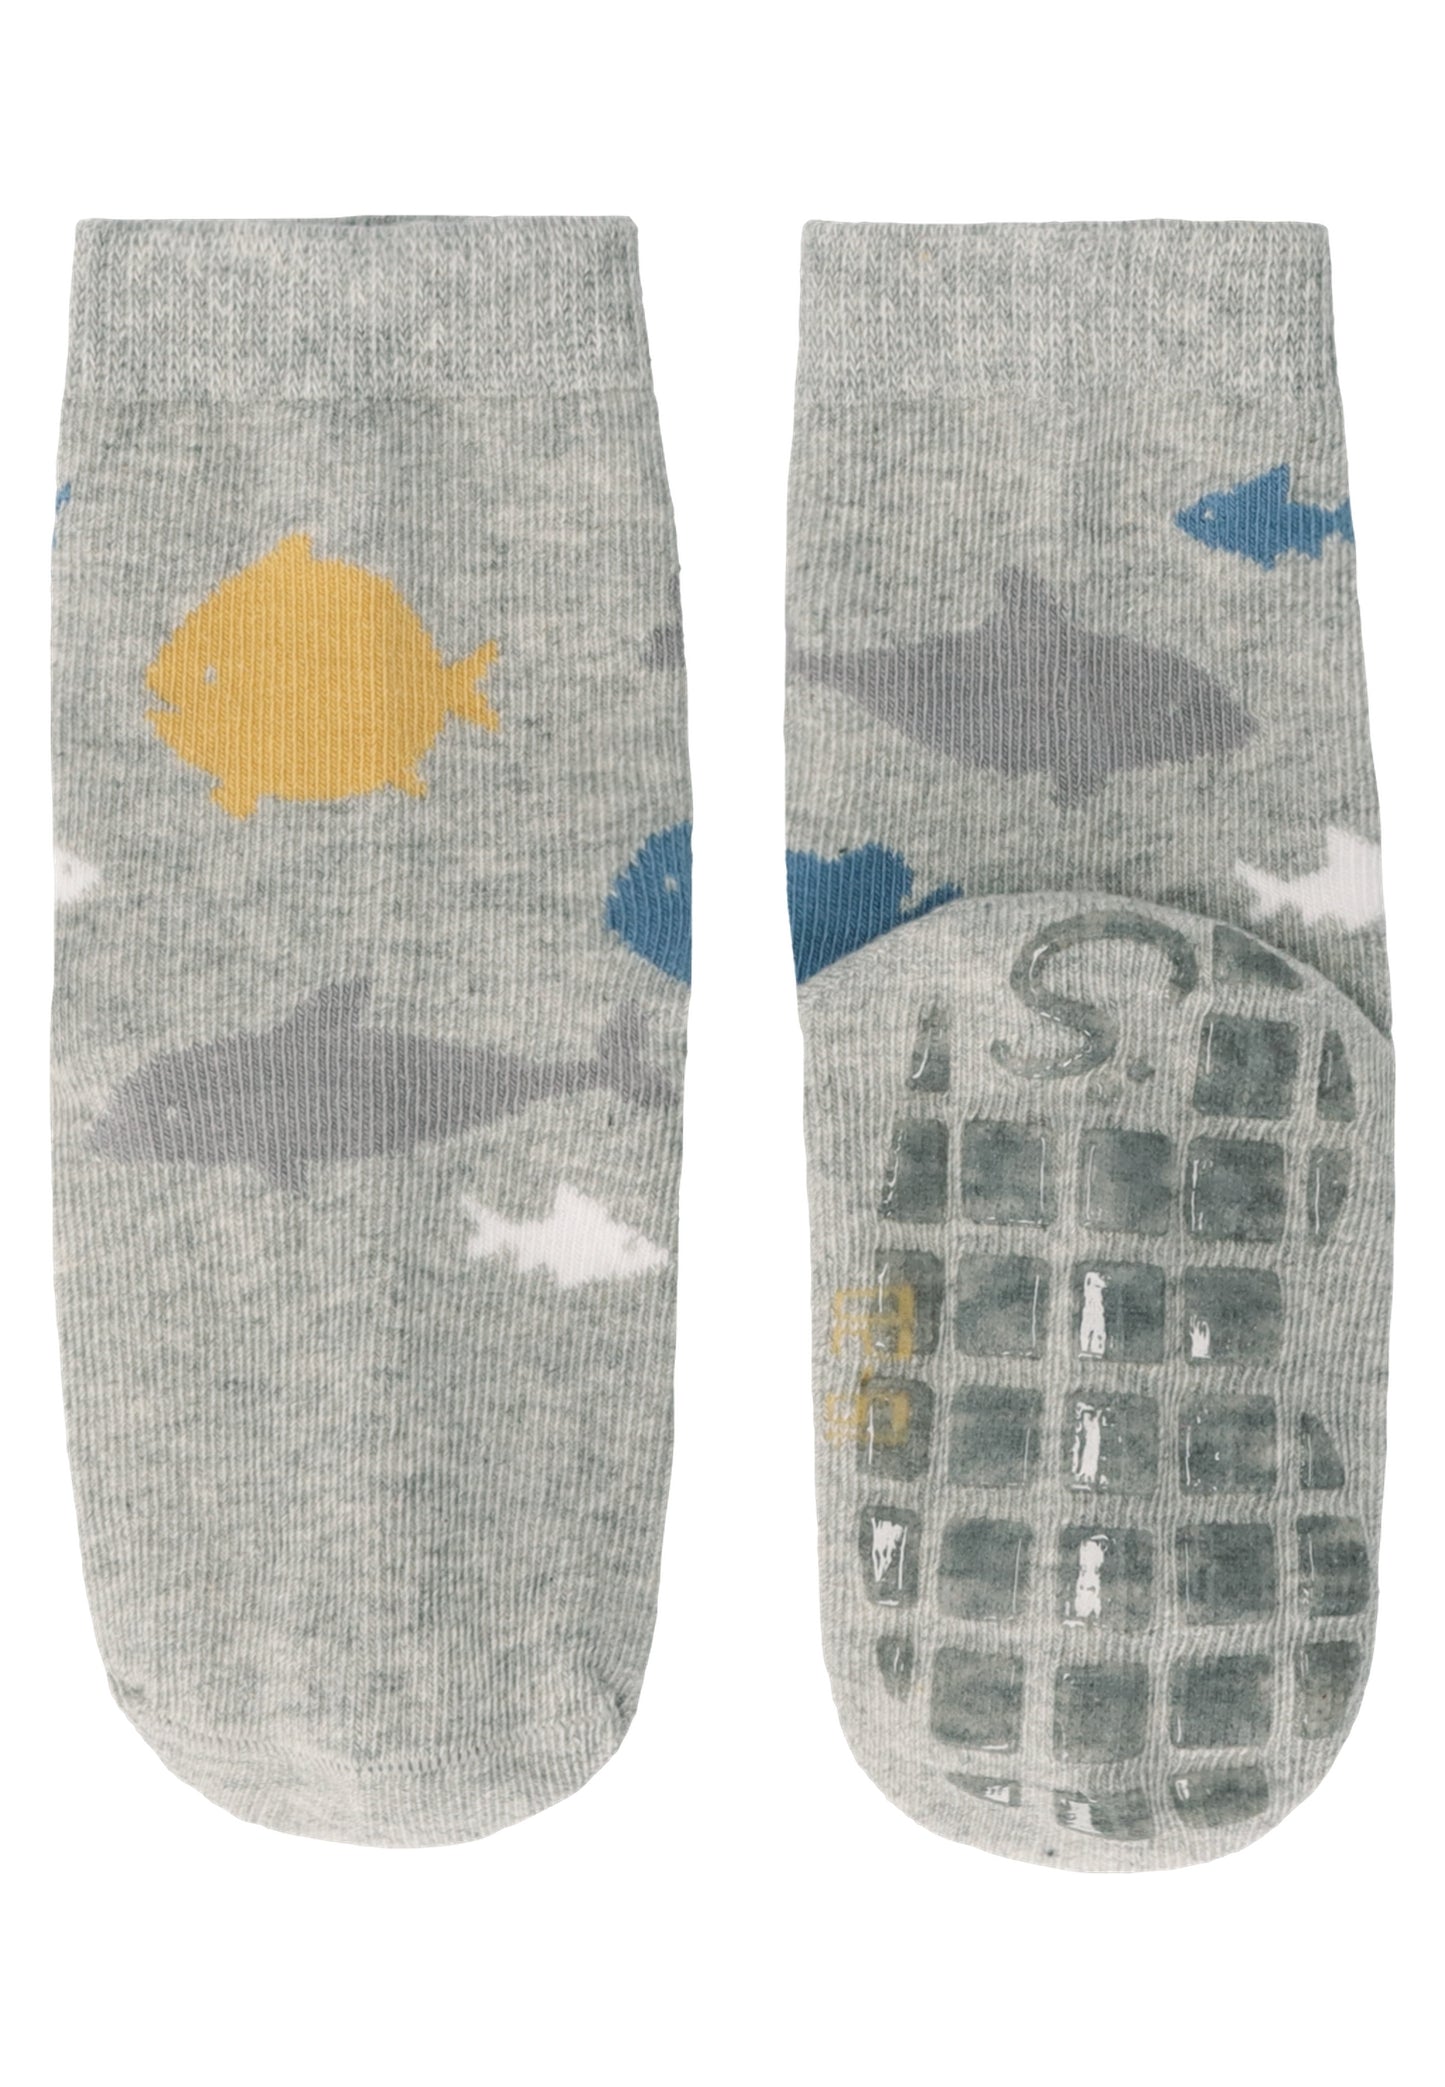 ABS-Socken DP Hai/Fische